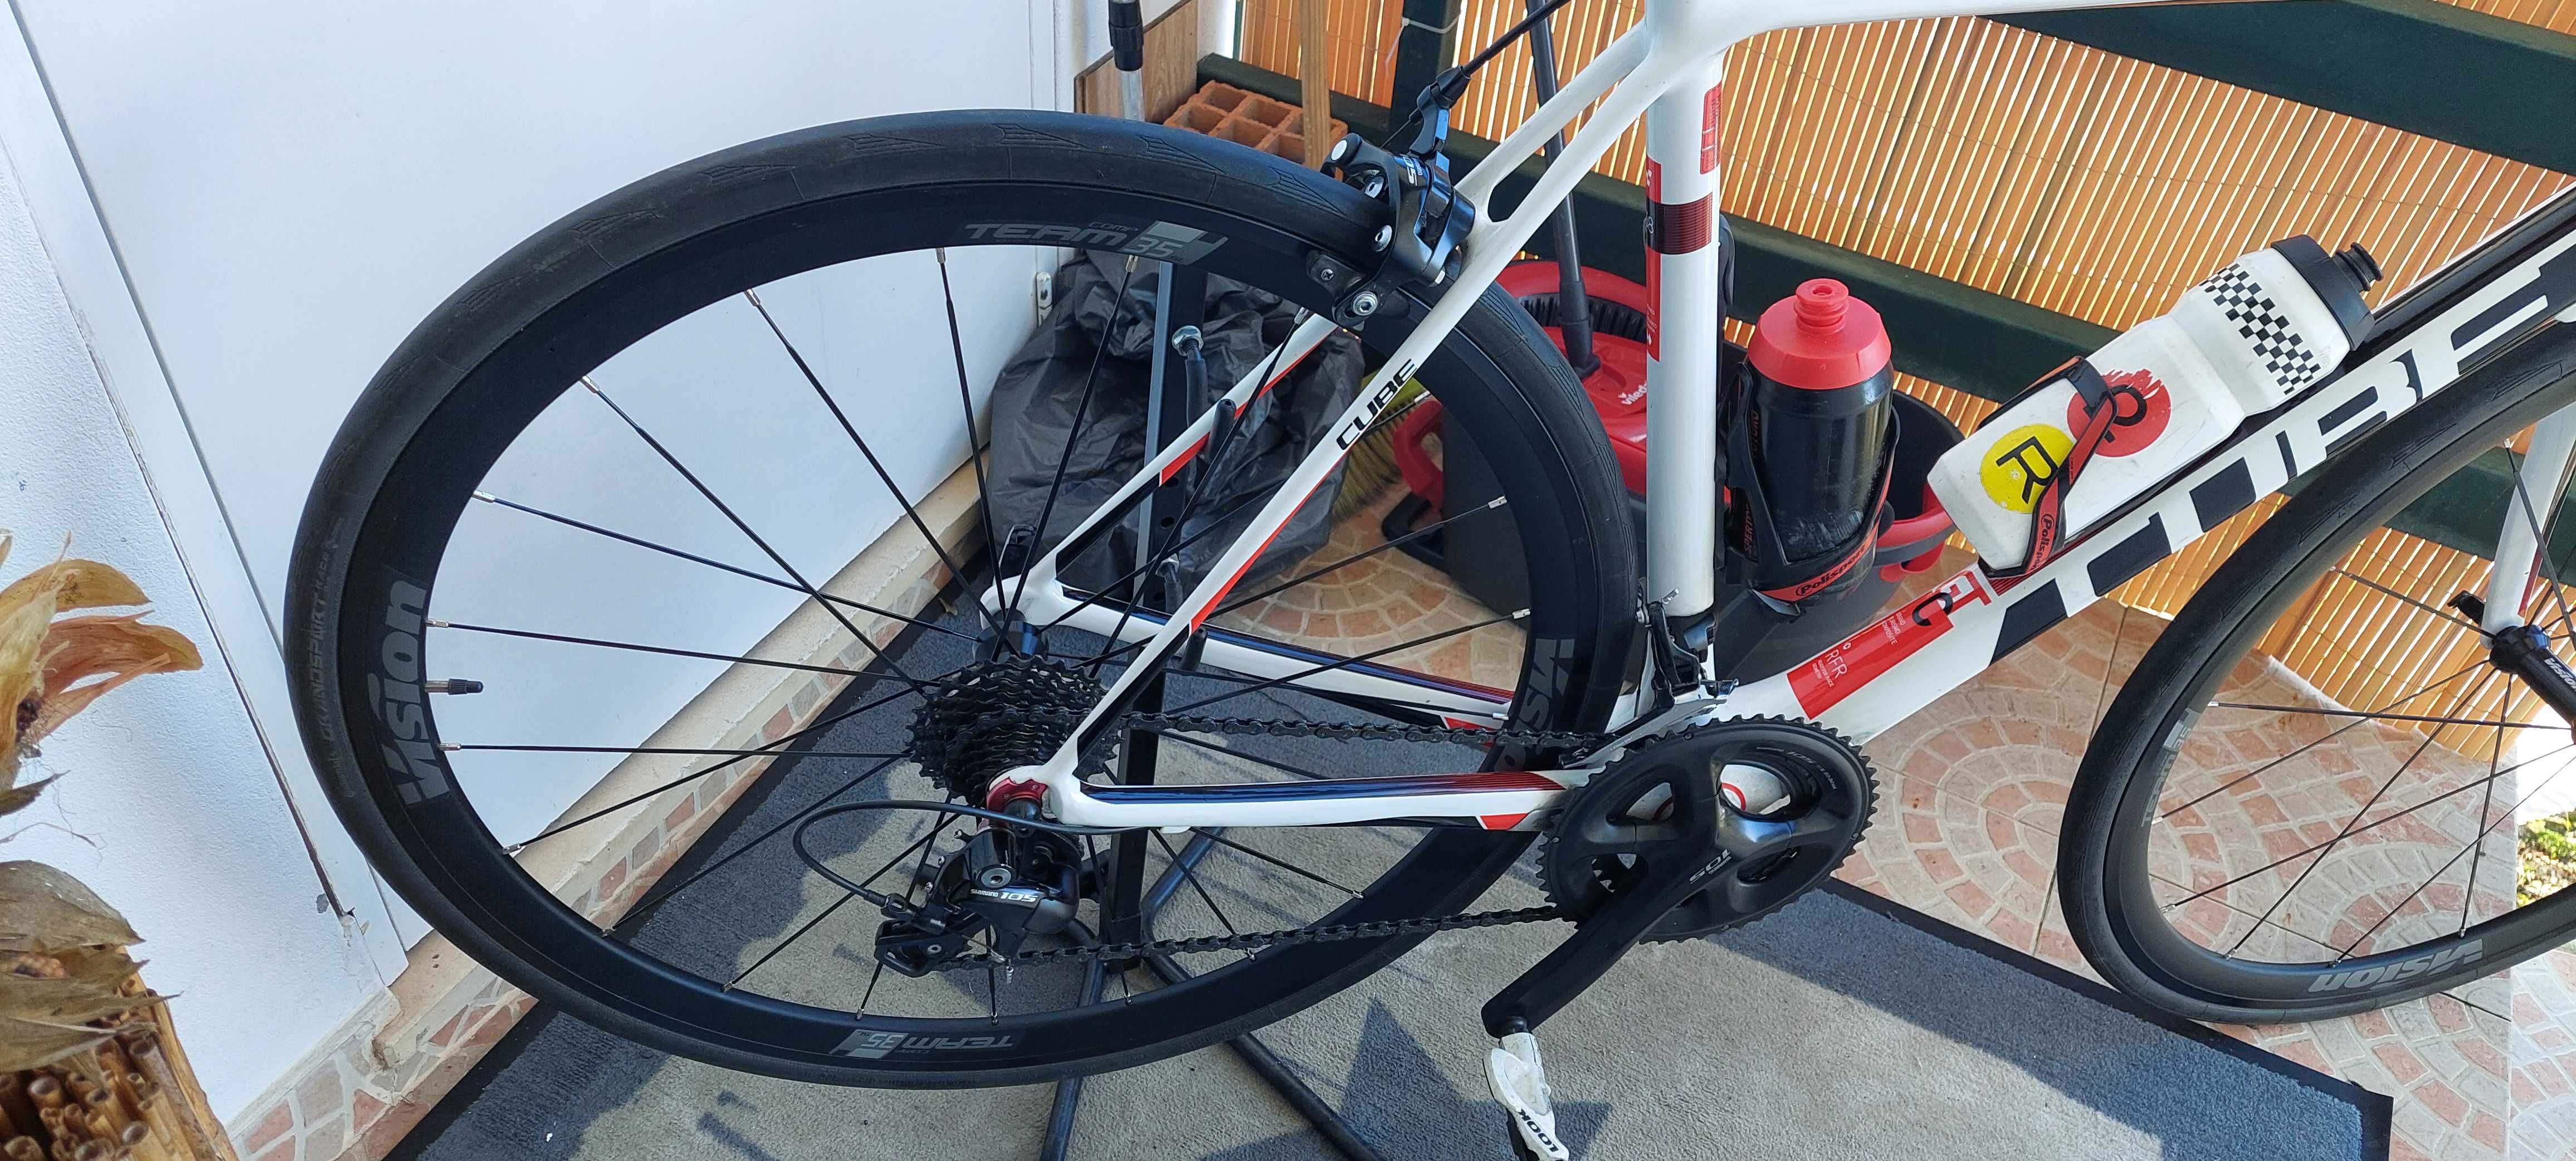 Bicicleta Cube de carbono tamanho L